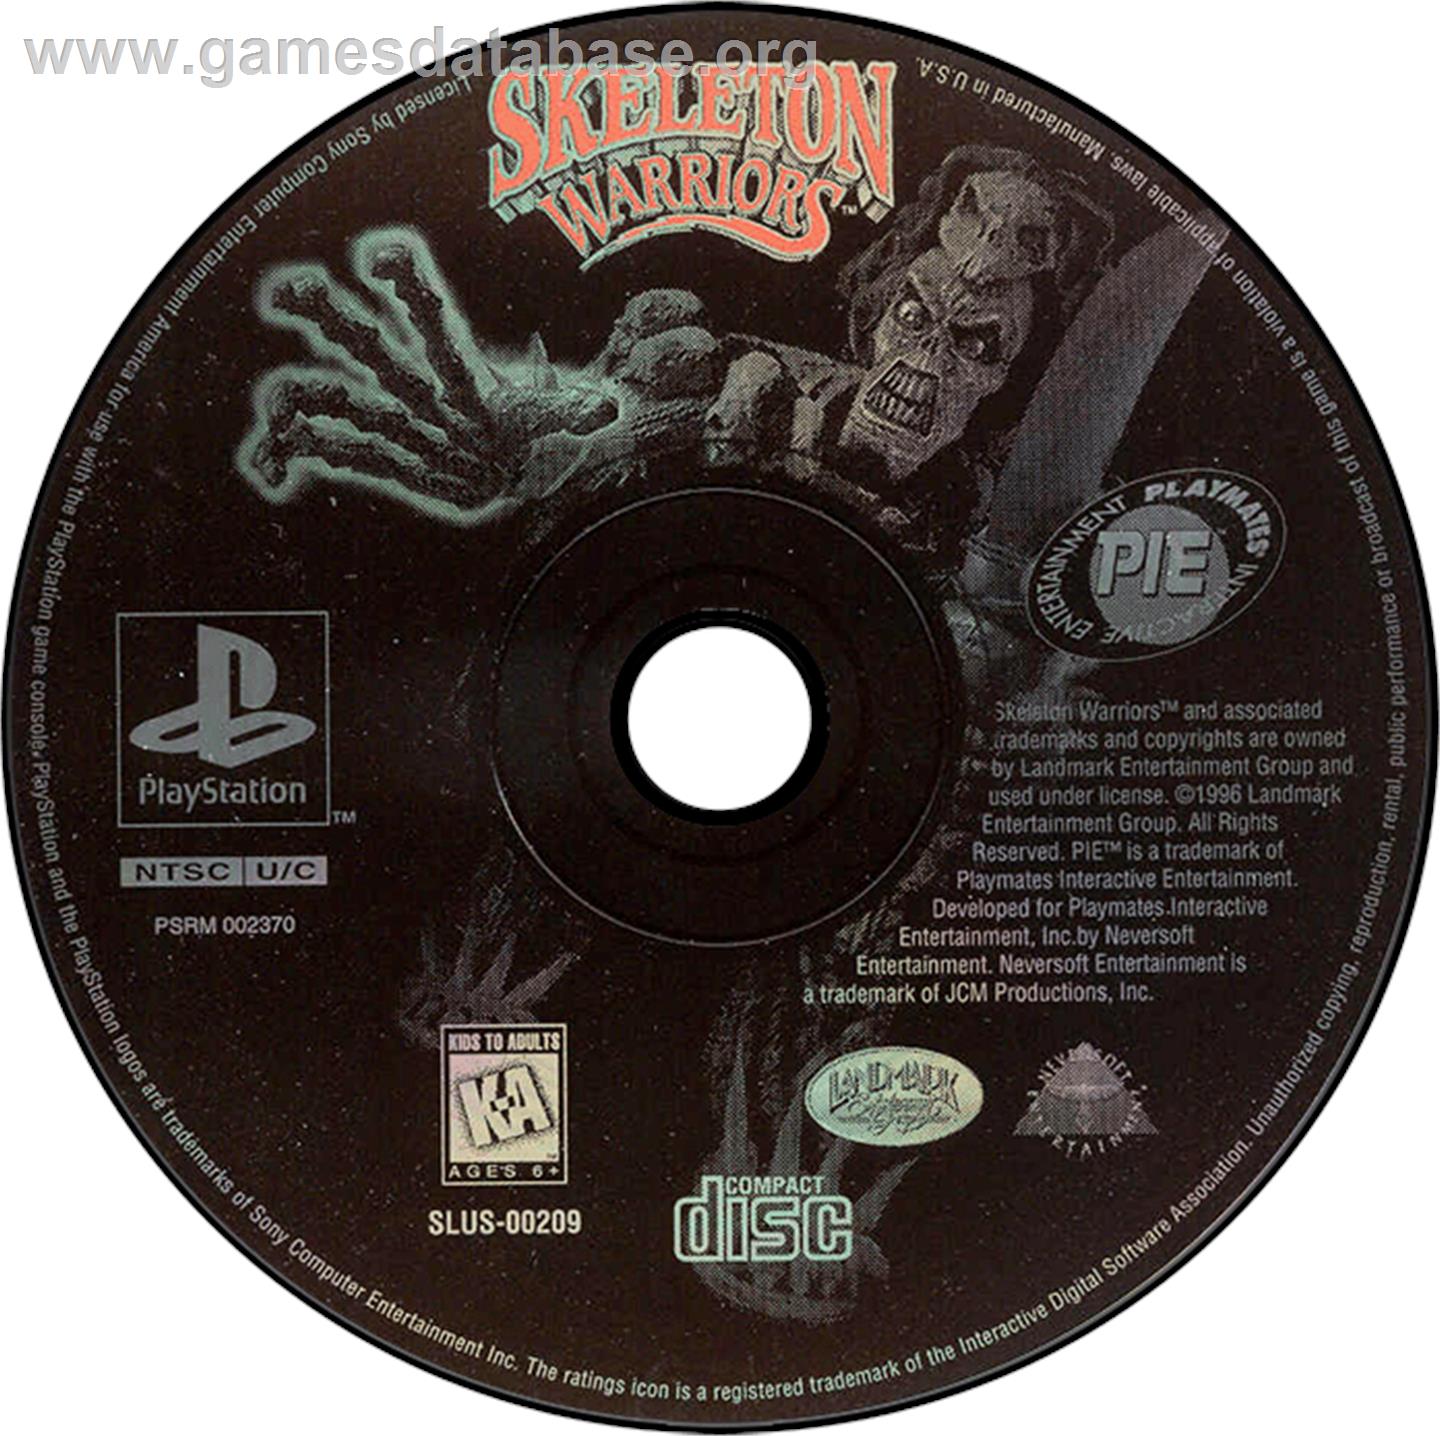 Skeleton Warriors - Sony Playstation - Artwork - Disc